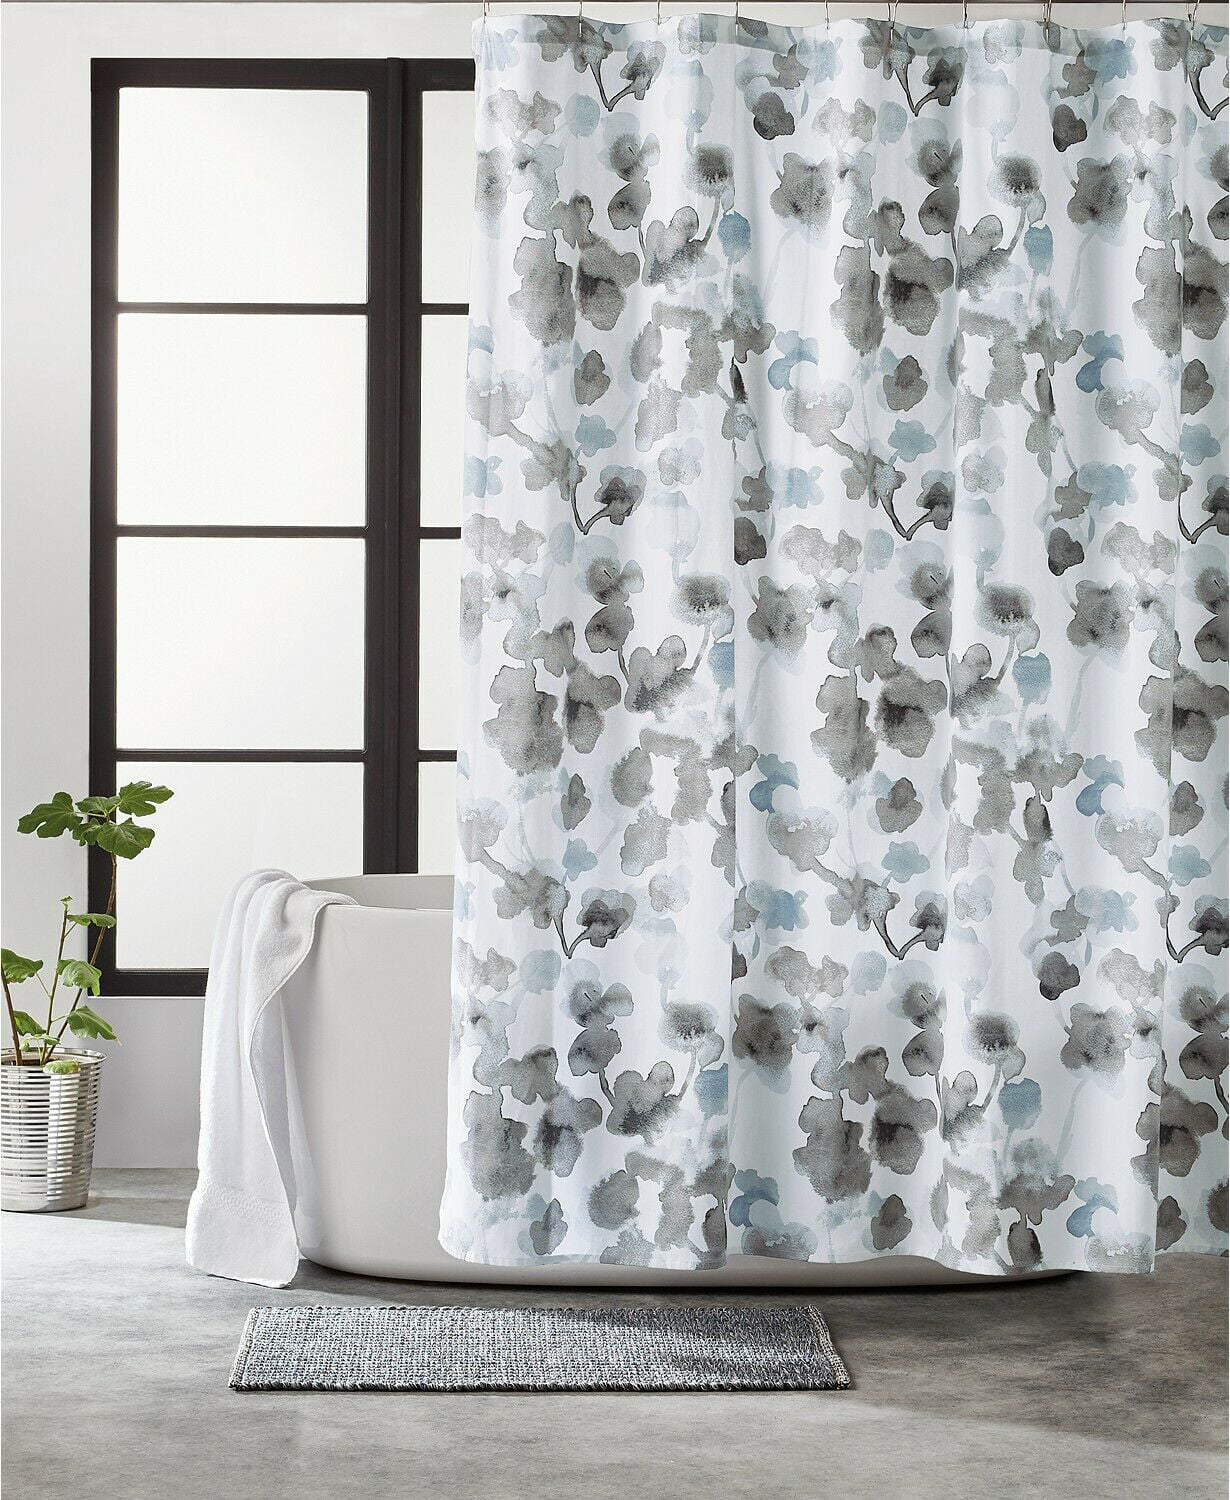 Details about   New DKNY Fabric Shower Curtain 72"x72" WATERCOLOR FIELDS SEERSUCKER ~ Flowers 